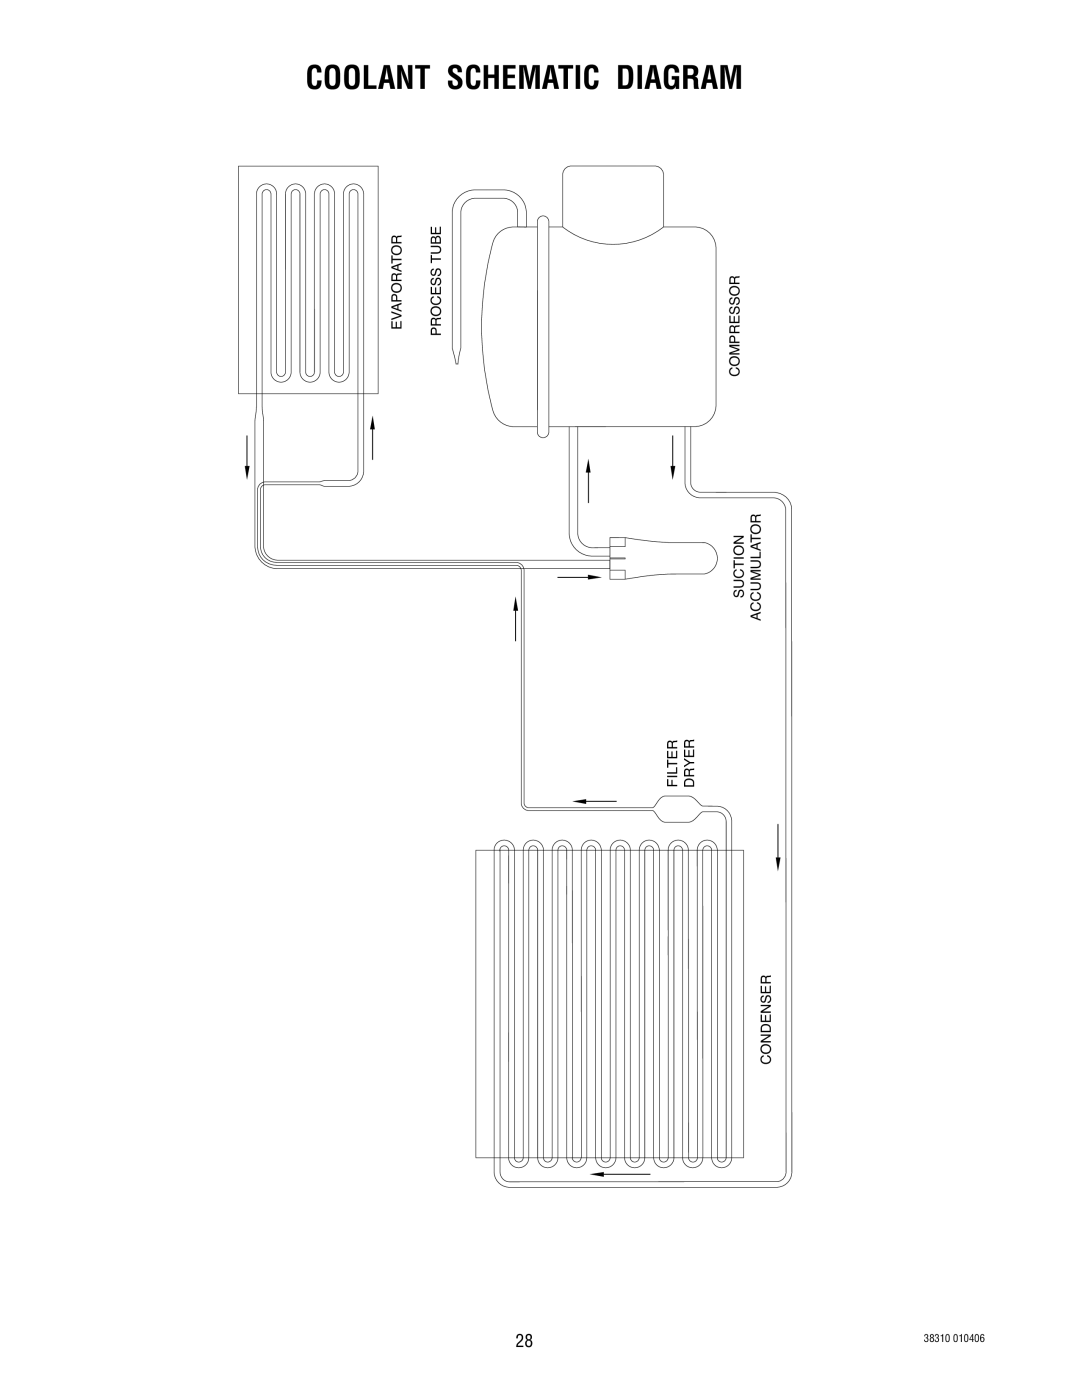 Bunn JDF-2 Coolant Schematic Diagram, Evaporator, Process Tube, Compressor, Accumulator Suction Dryer, Condenser, 38310 